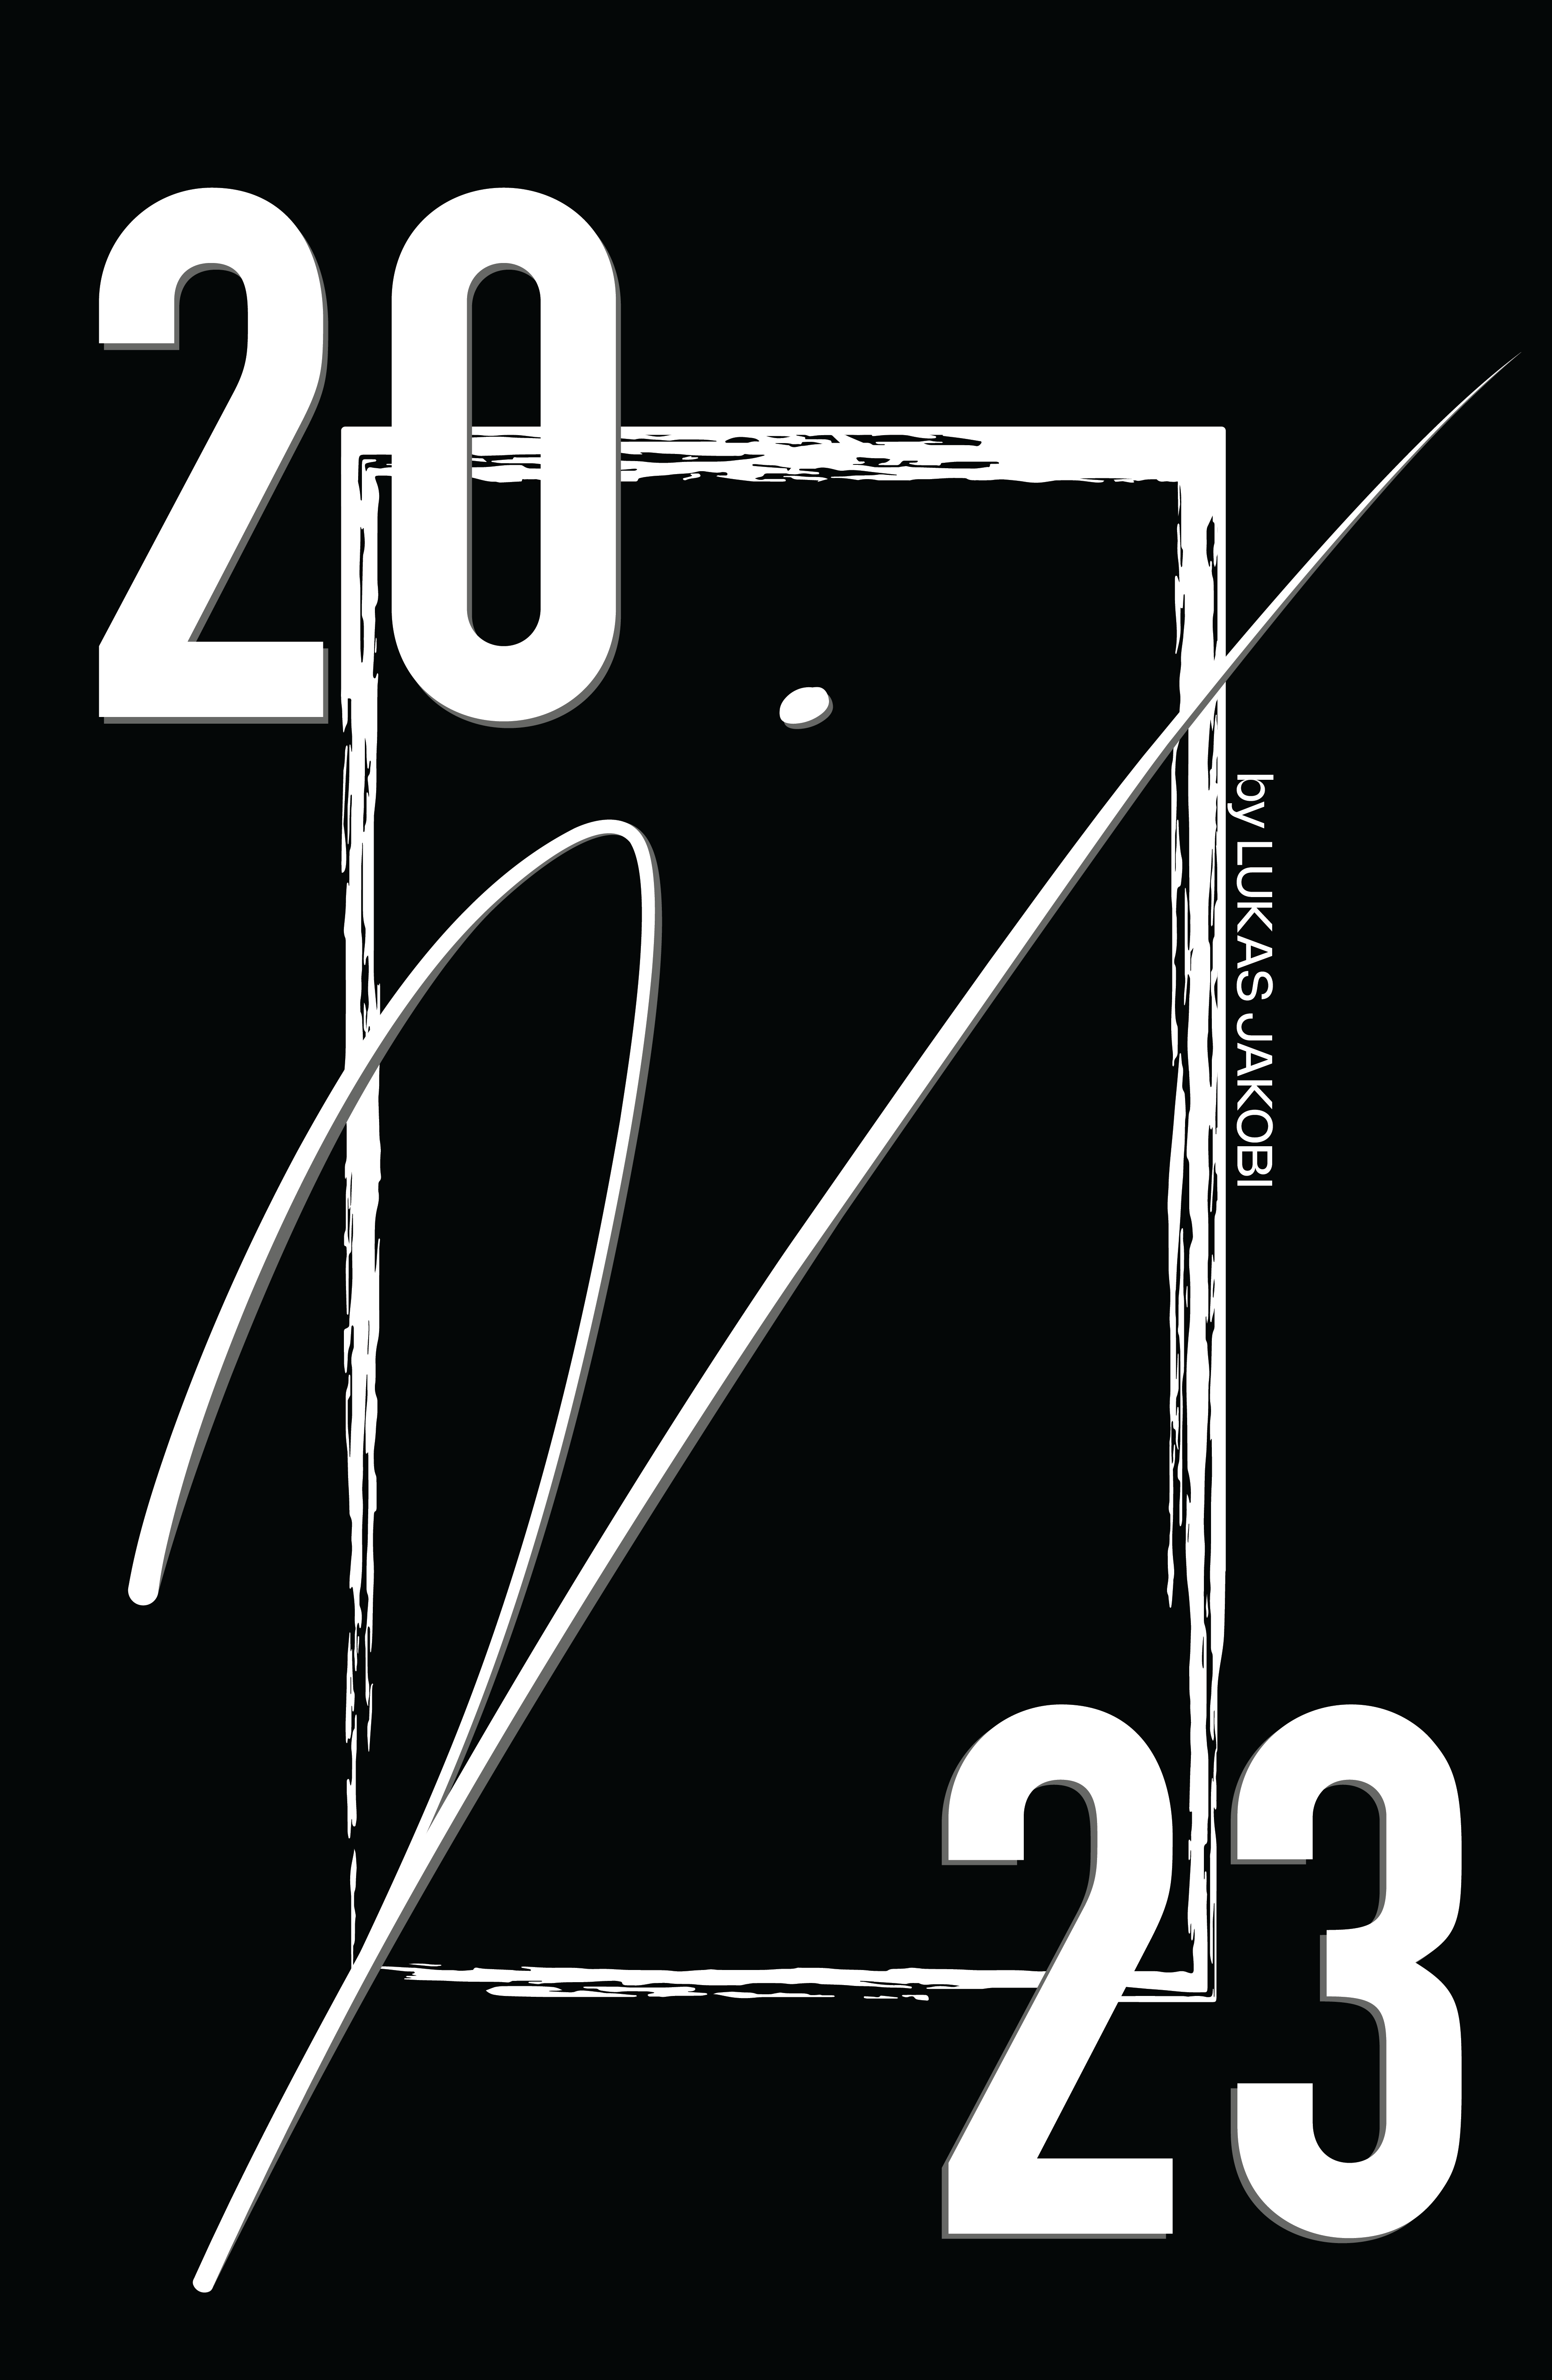 Zwanzig23 Logo